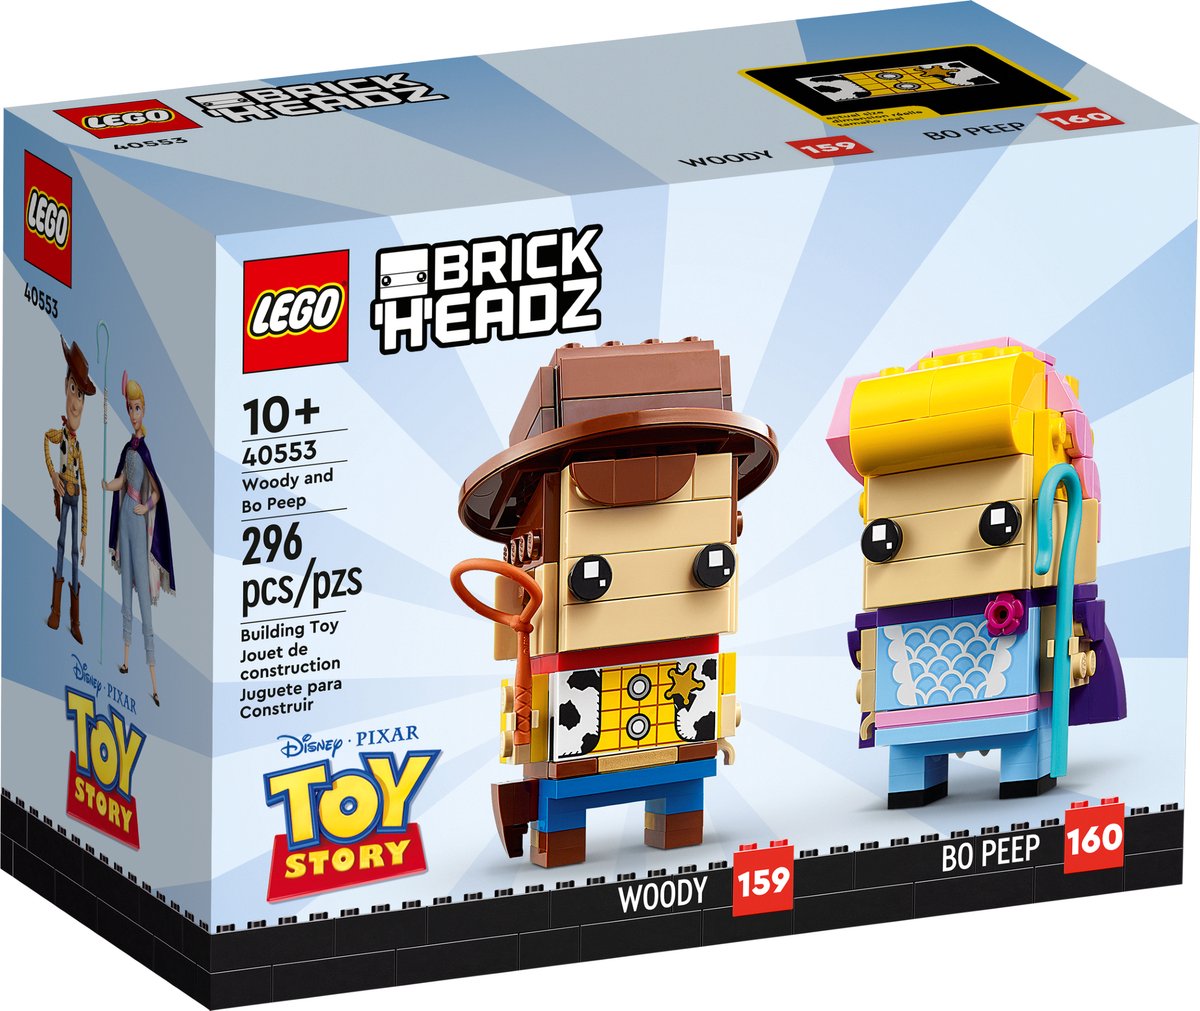   Brickheadz Woody & Bo Peep - 40553